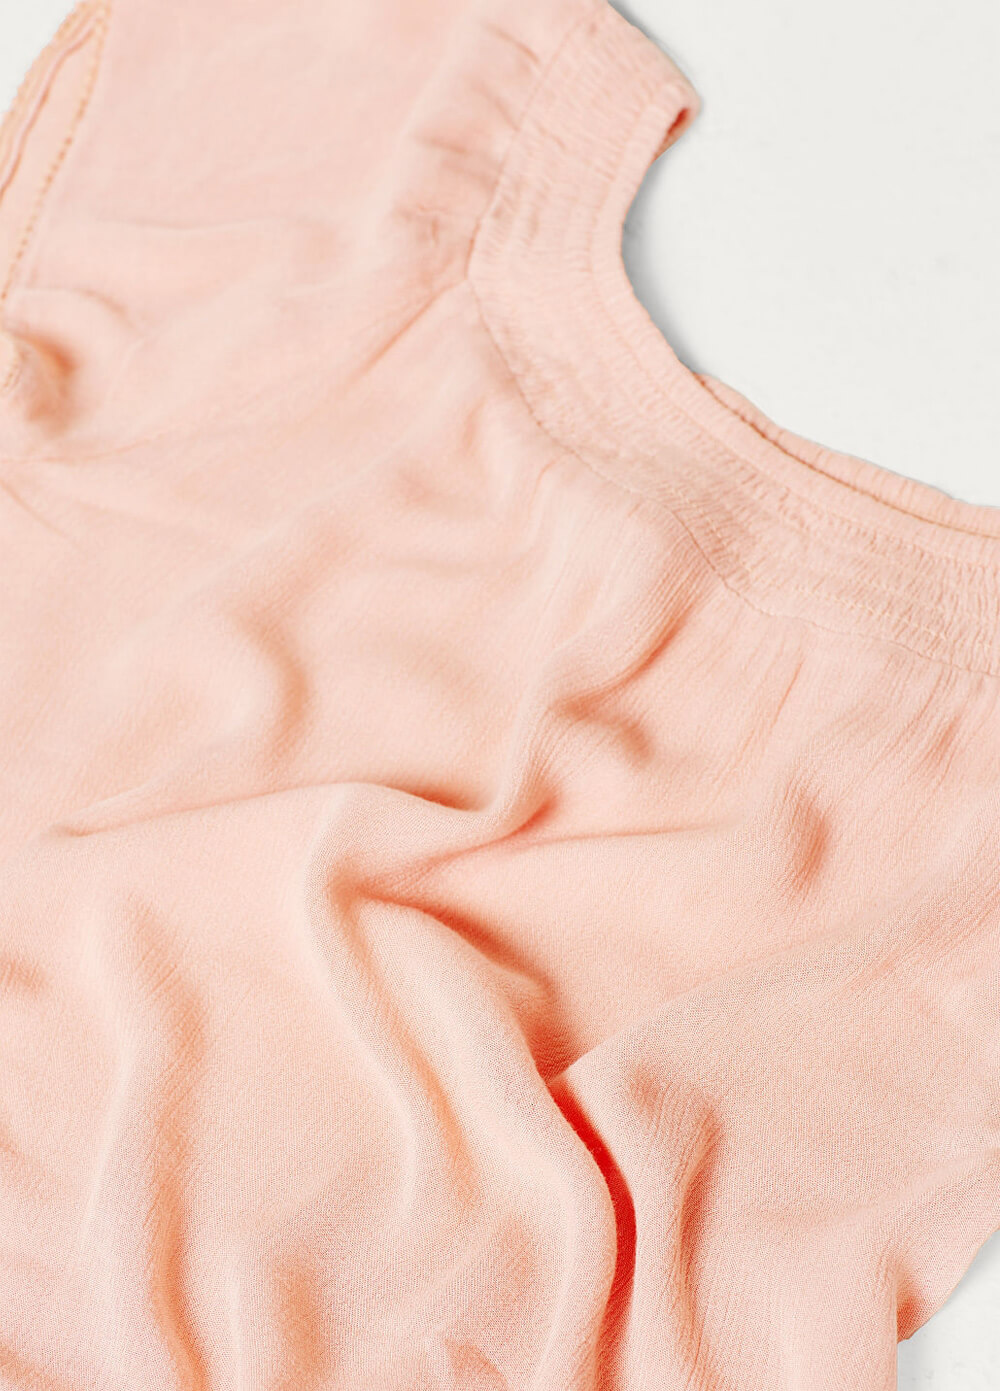 Off-Shoulder Maternity Top in Rose by Esprit